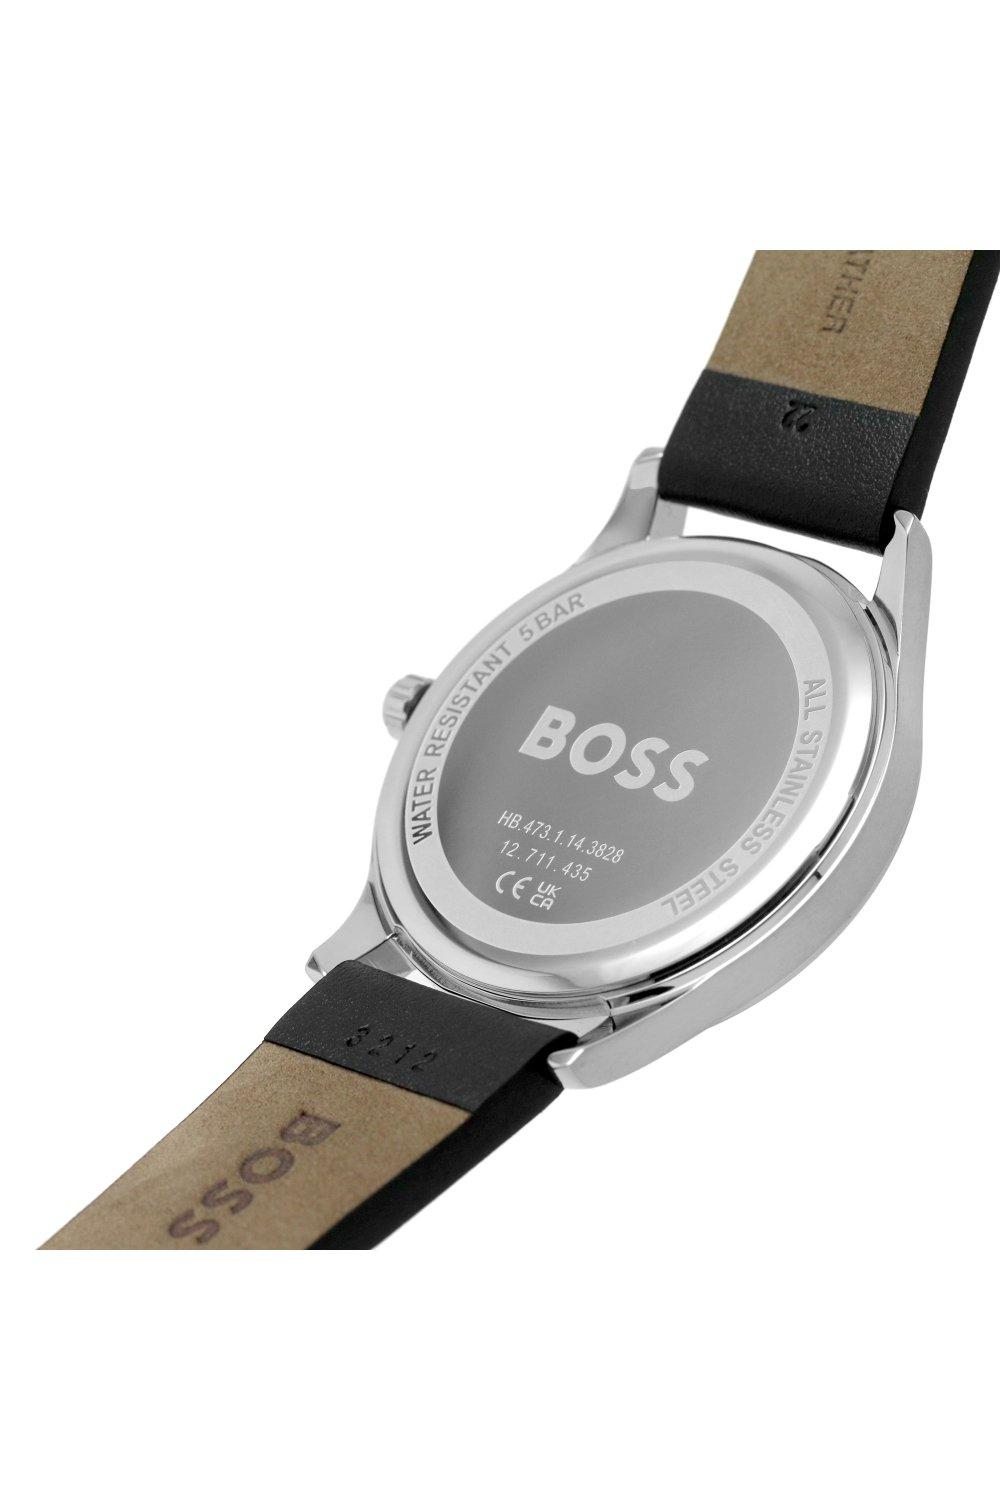 Analogue BOSS Fashion | Watches Reason - Steel Quartz 1513981 Watch | Stainless